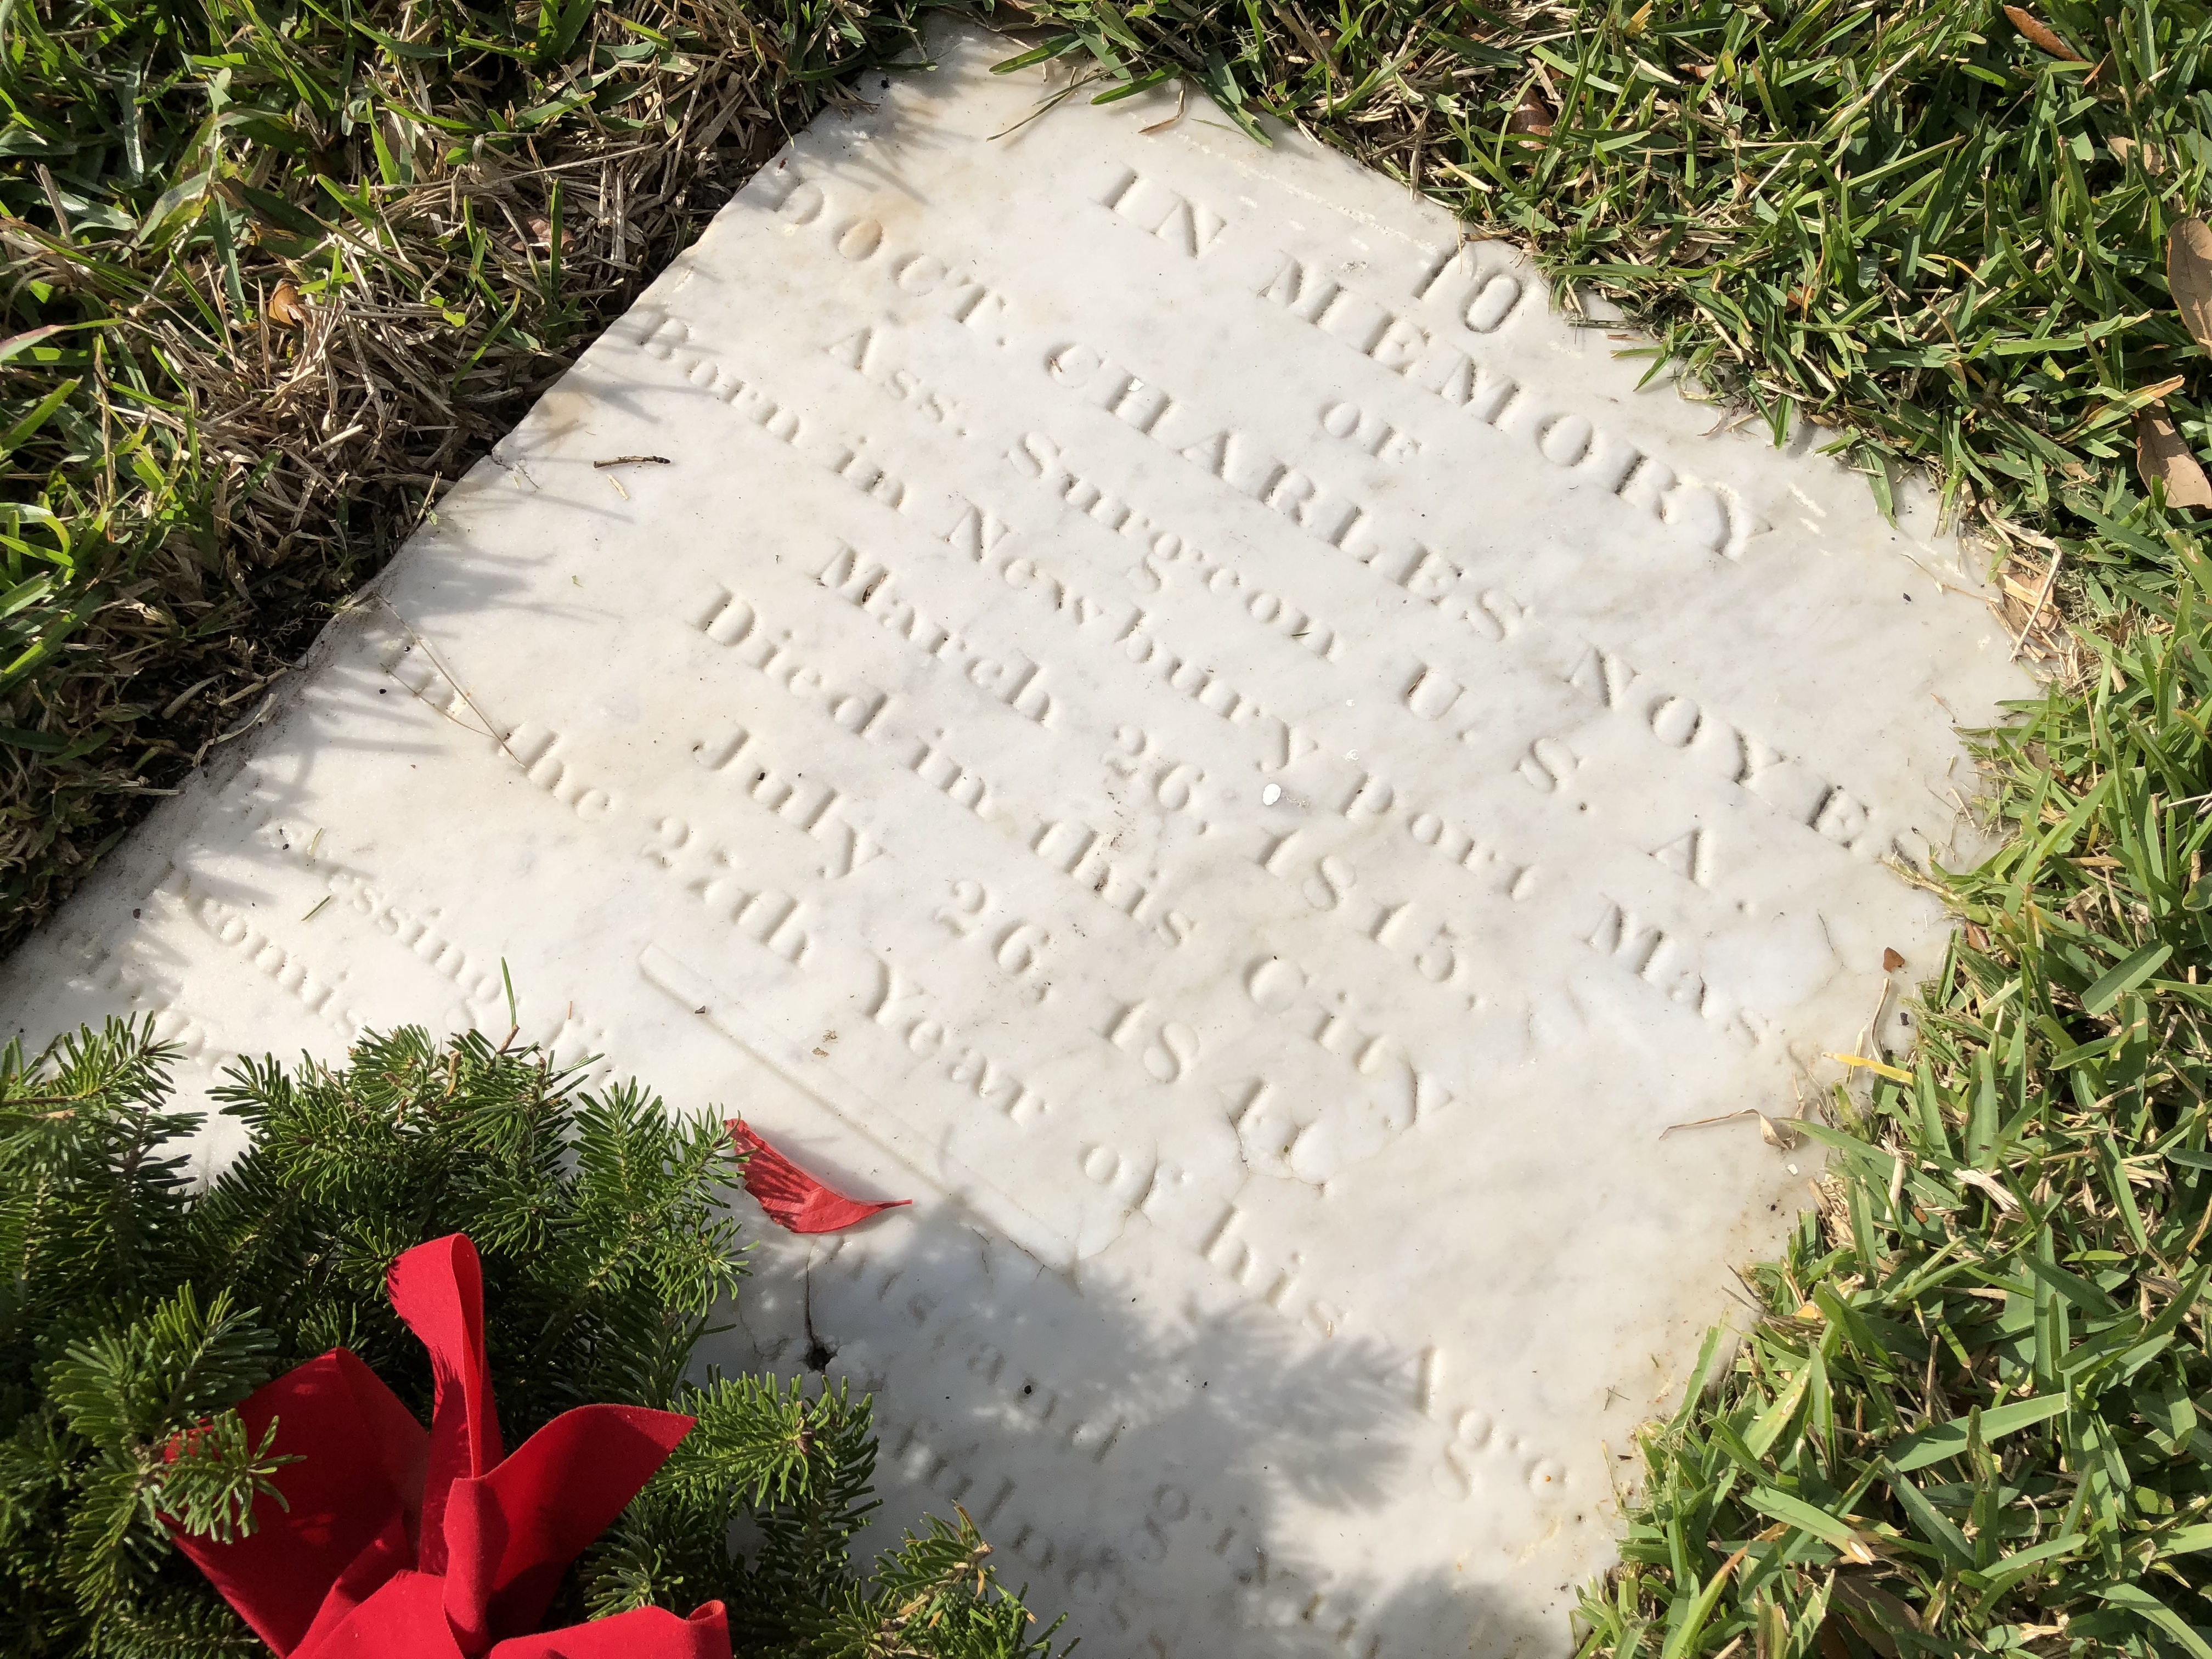 Noyes grave marker